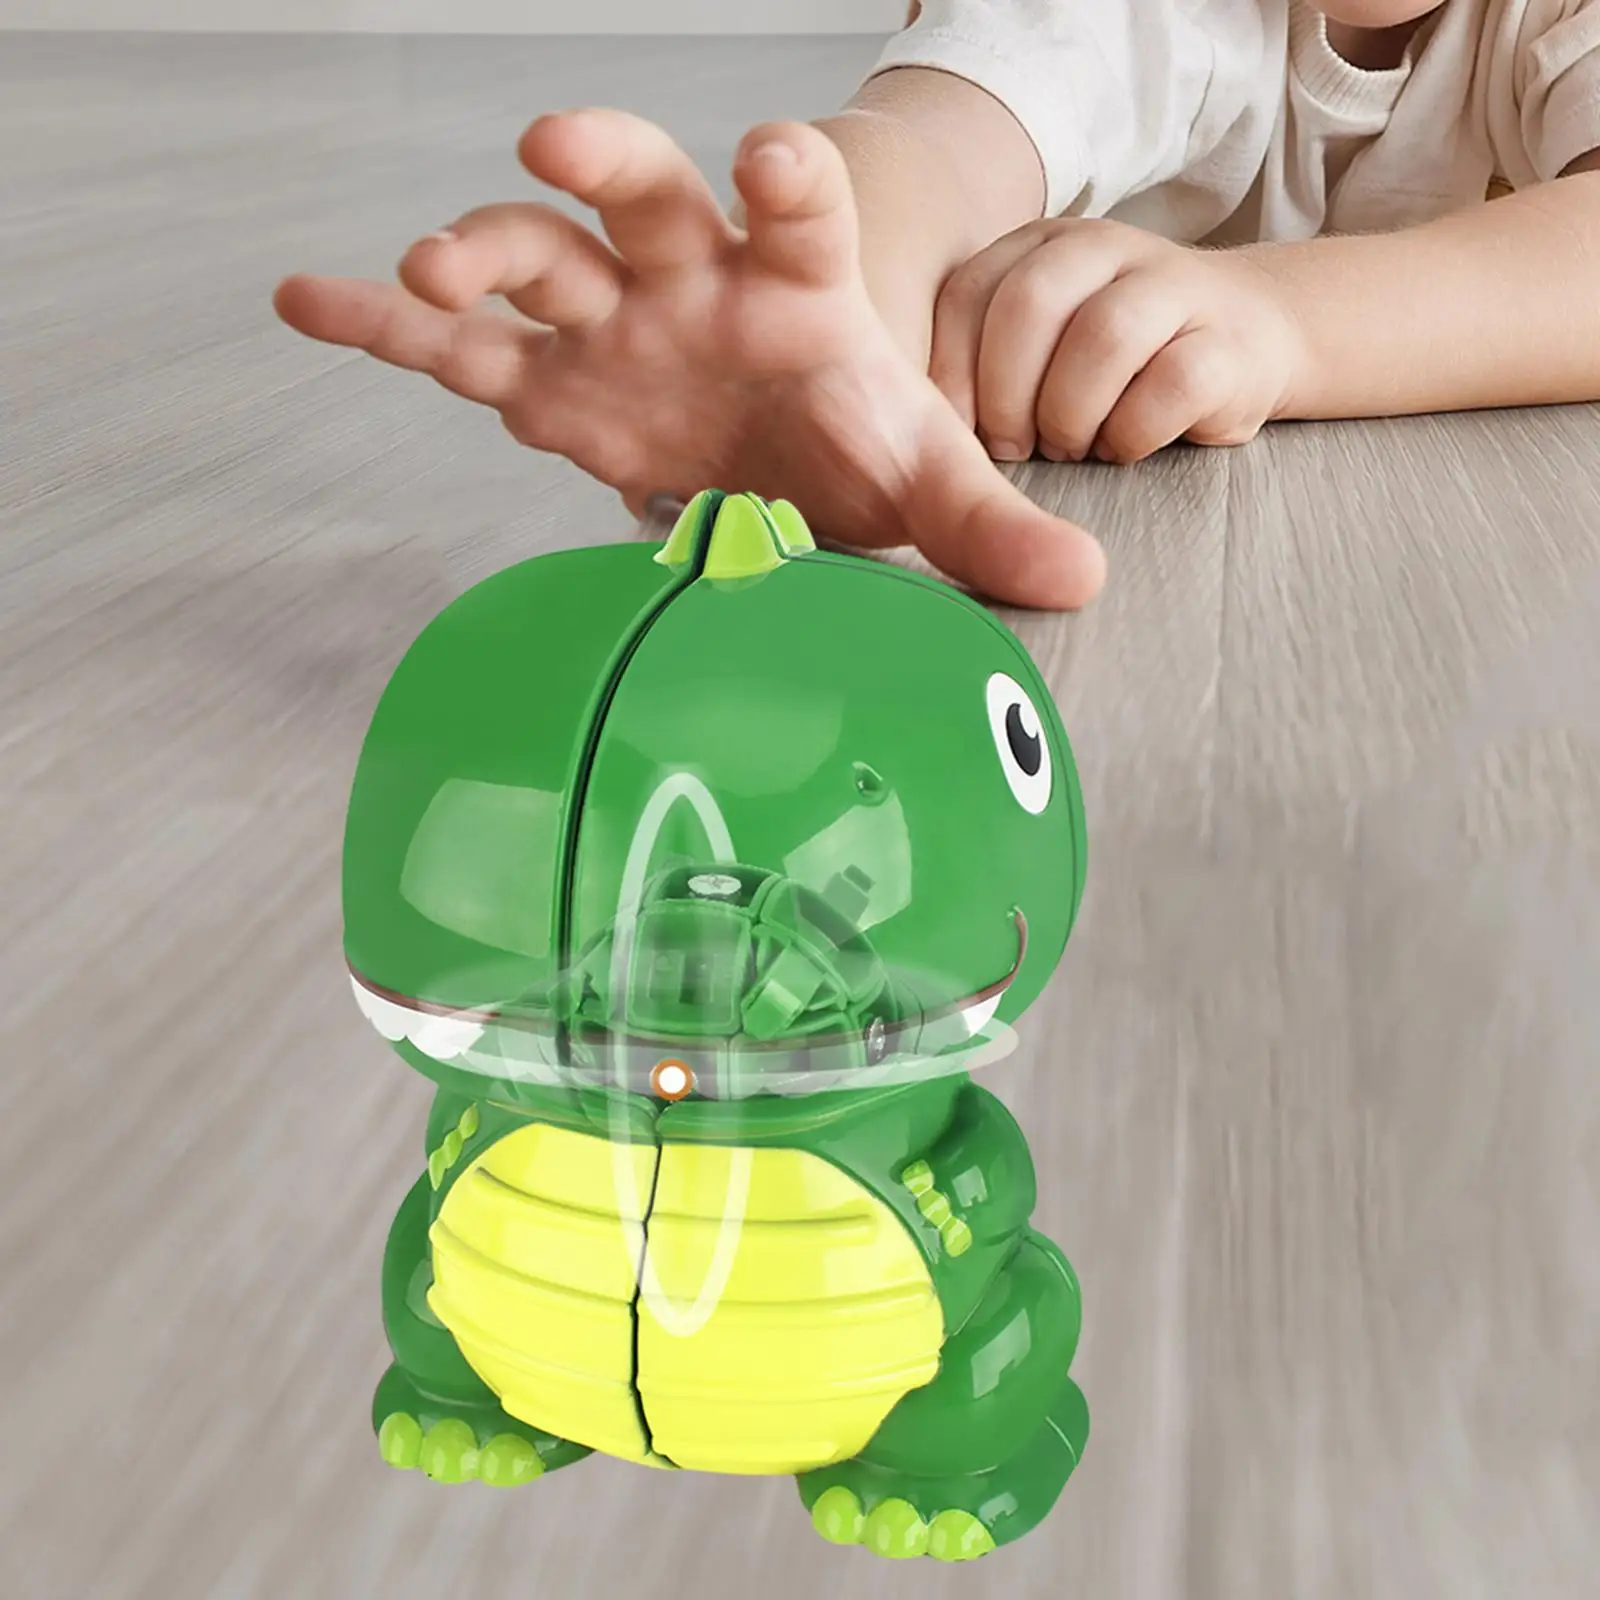 Dinosaur Speed Cube Portable Enlightenment Toy Irregular Speed Cube for Hand Flexibility Travel Preschool Creativity Imagination